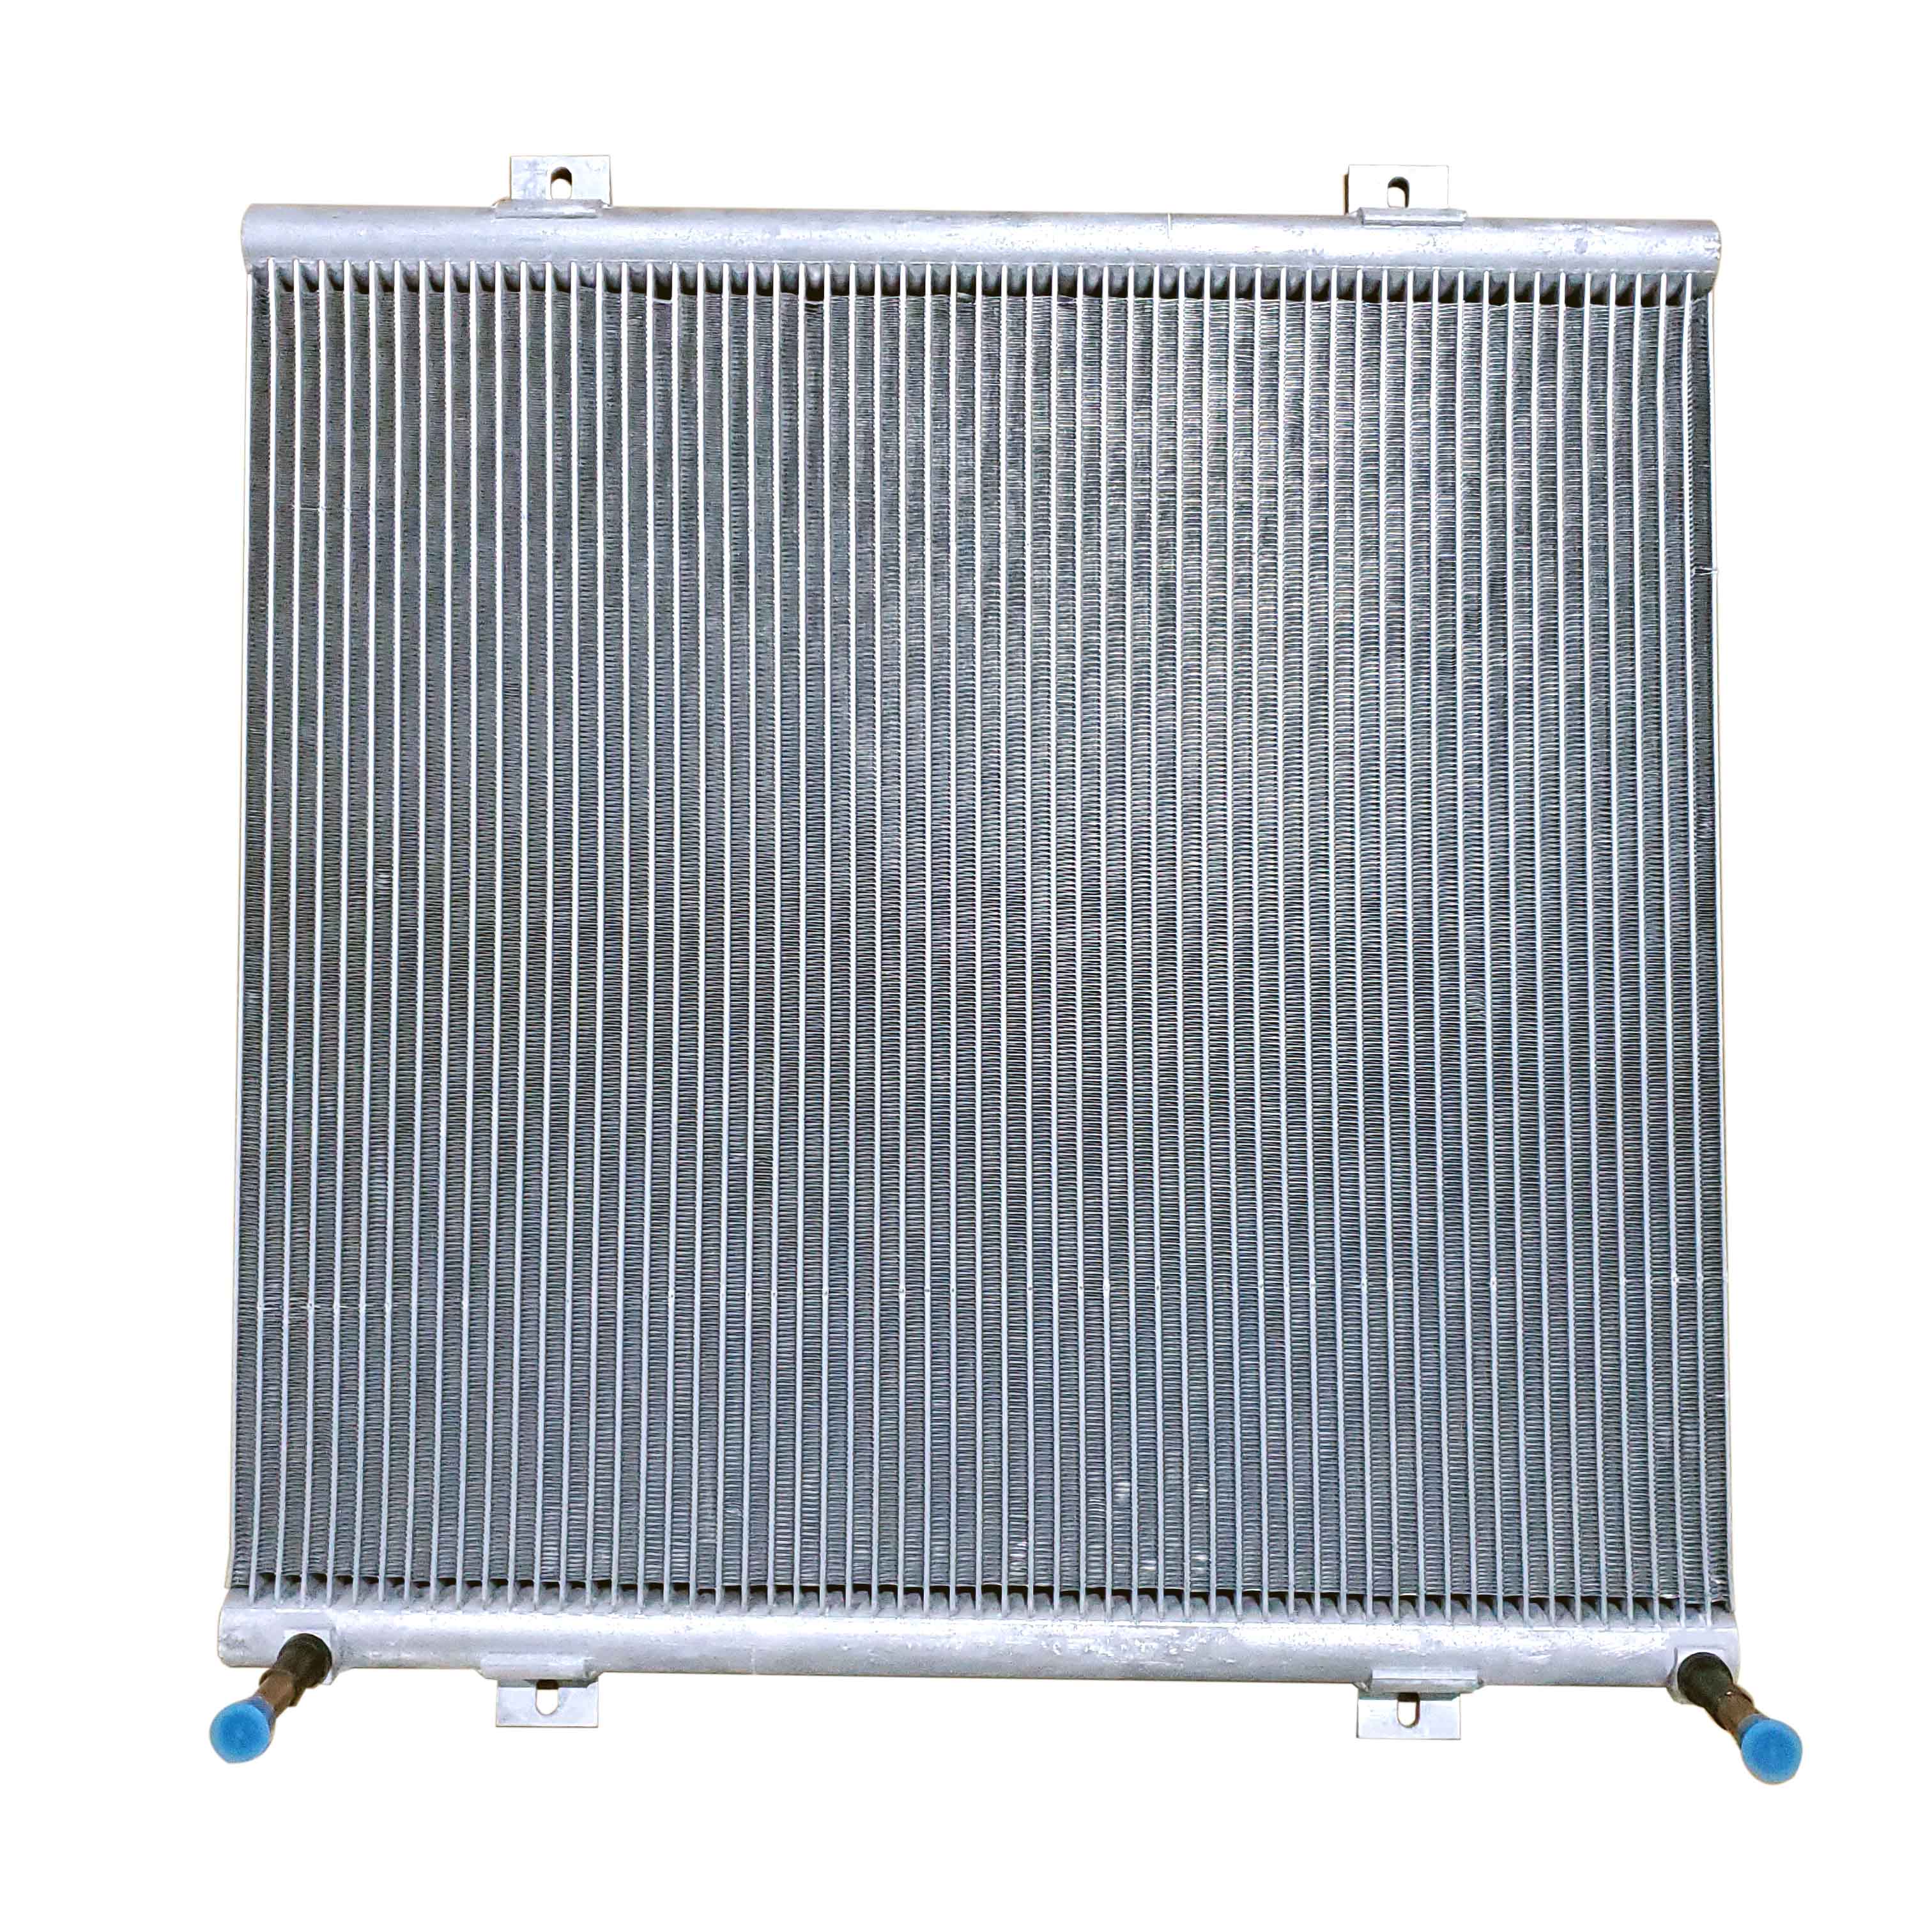 Trocador de calor de alumínio industrial do condensador do microcanal do OEM